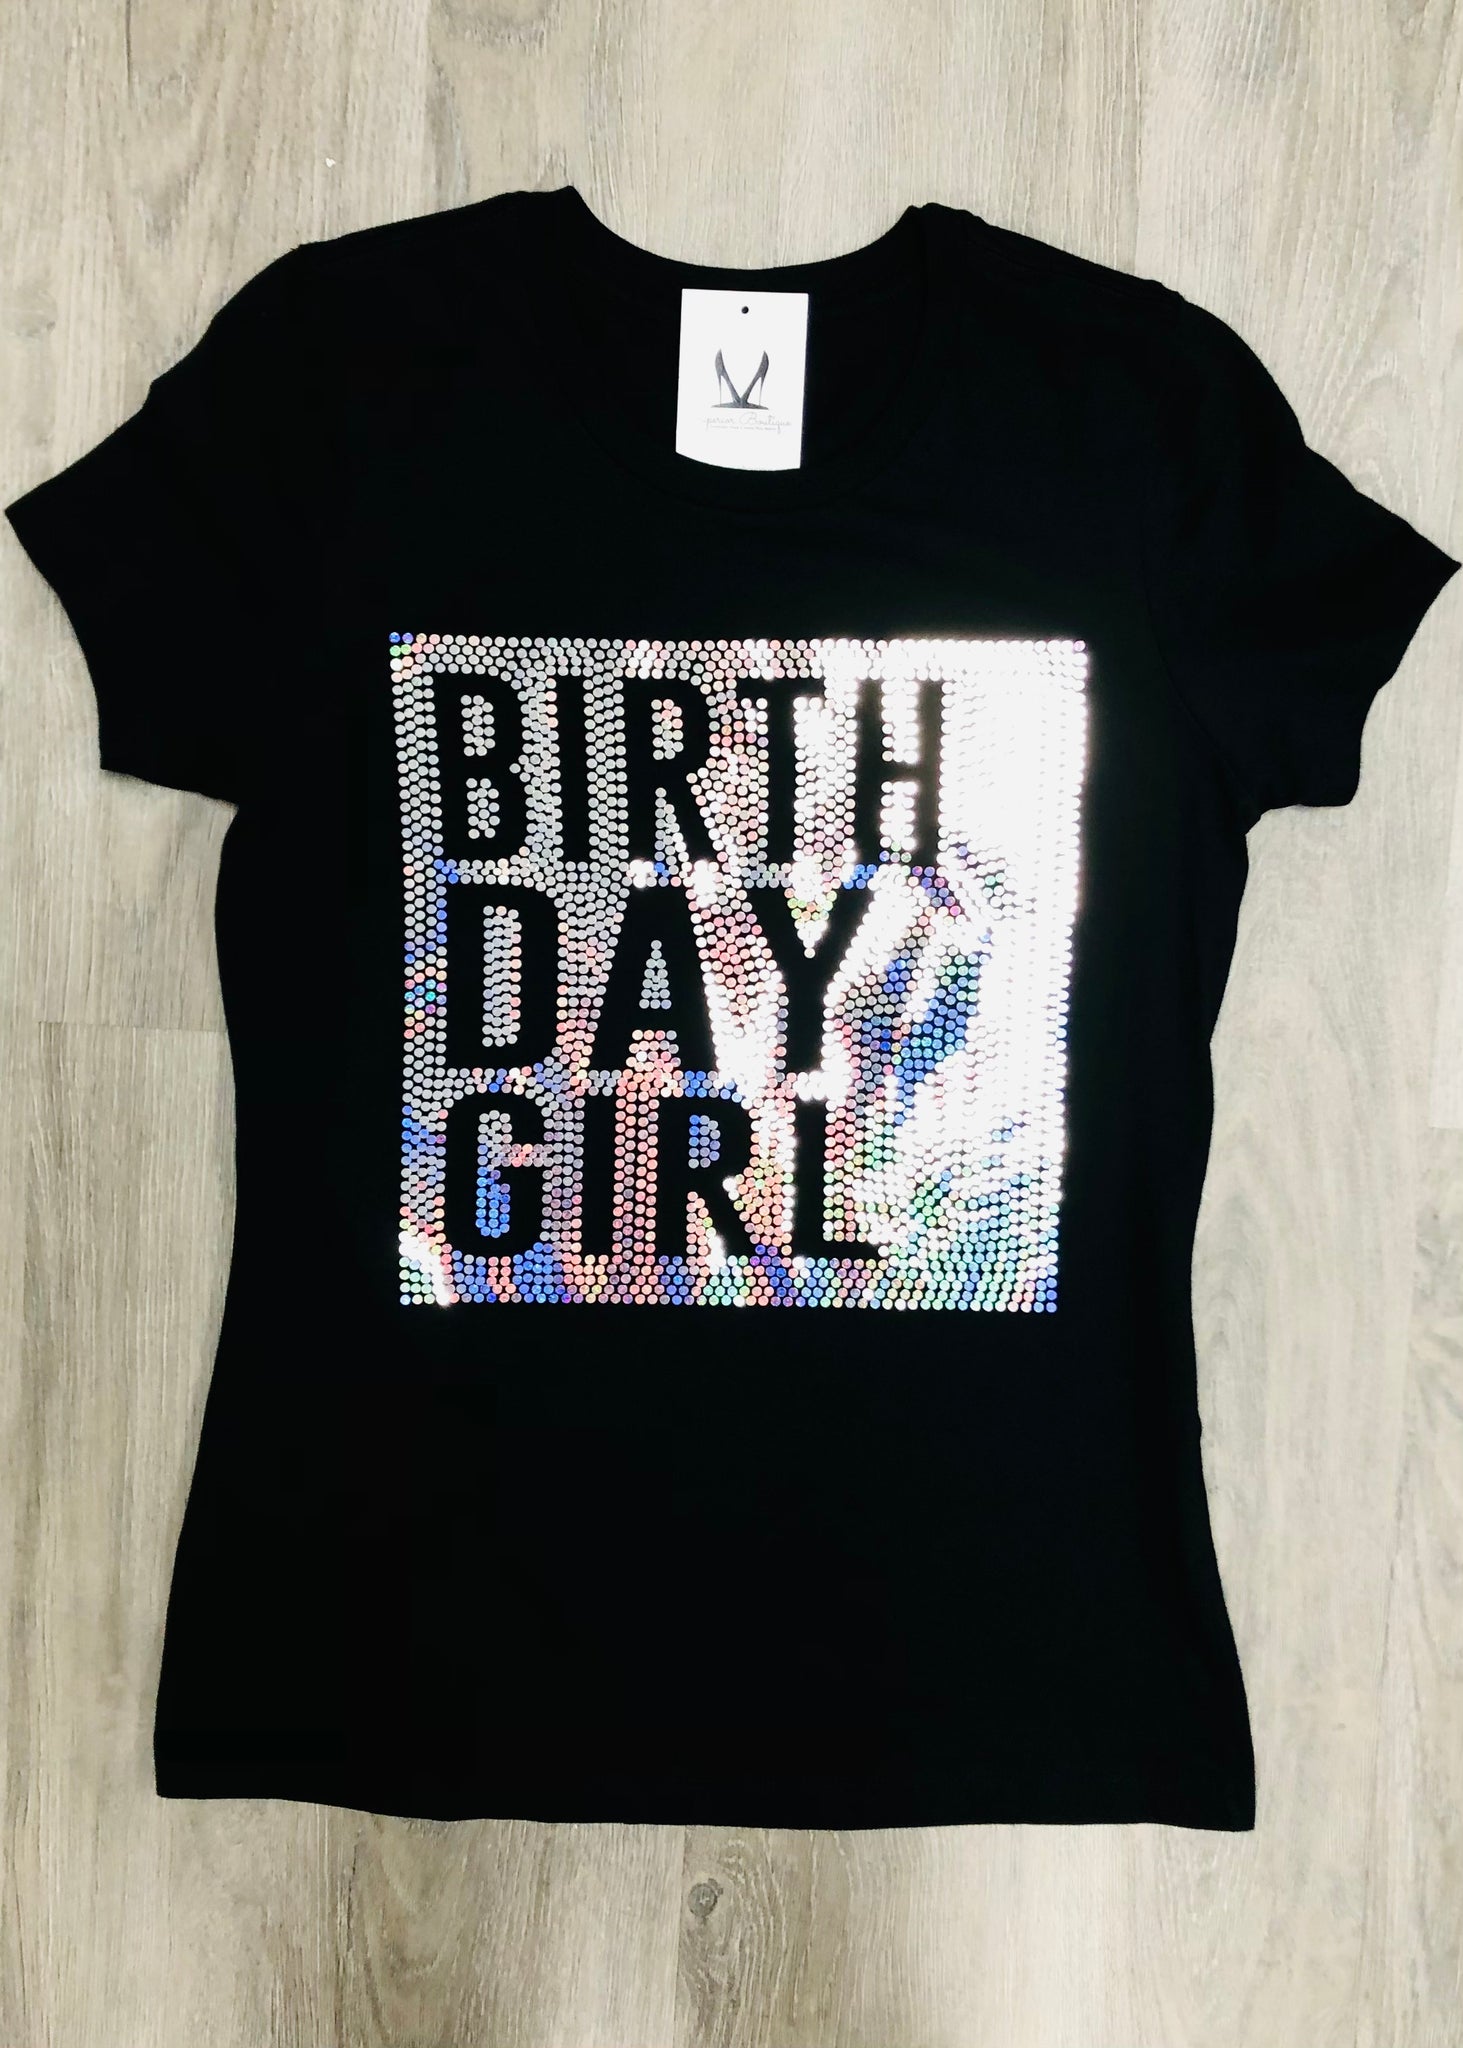 BIRTH DAY GIRL2 Bling Shirt